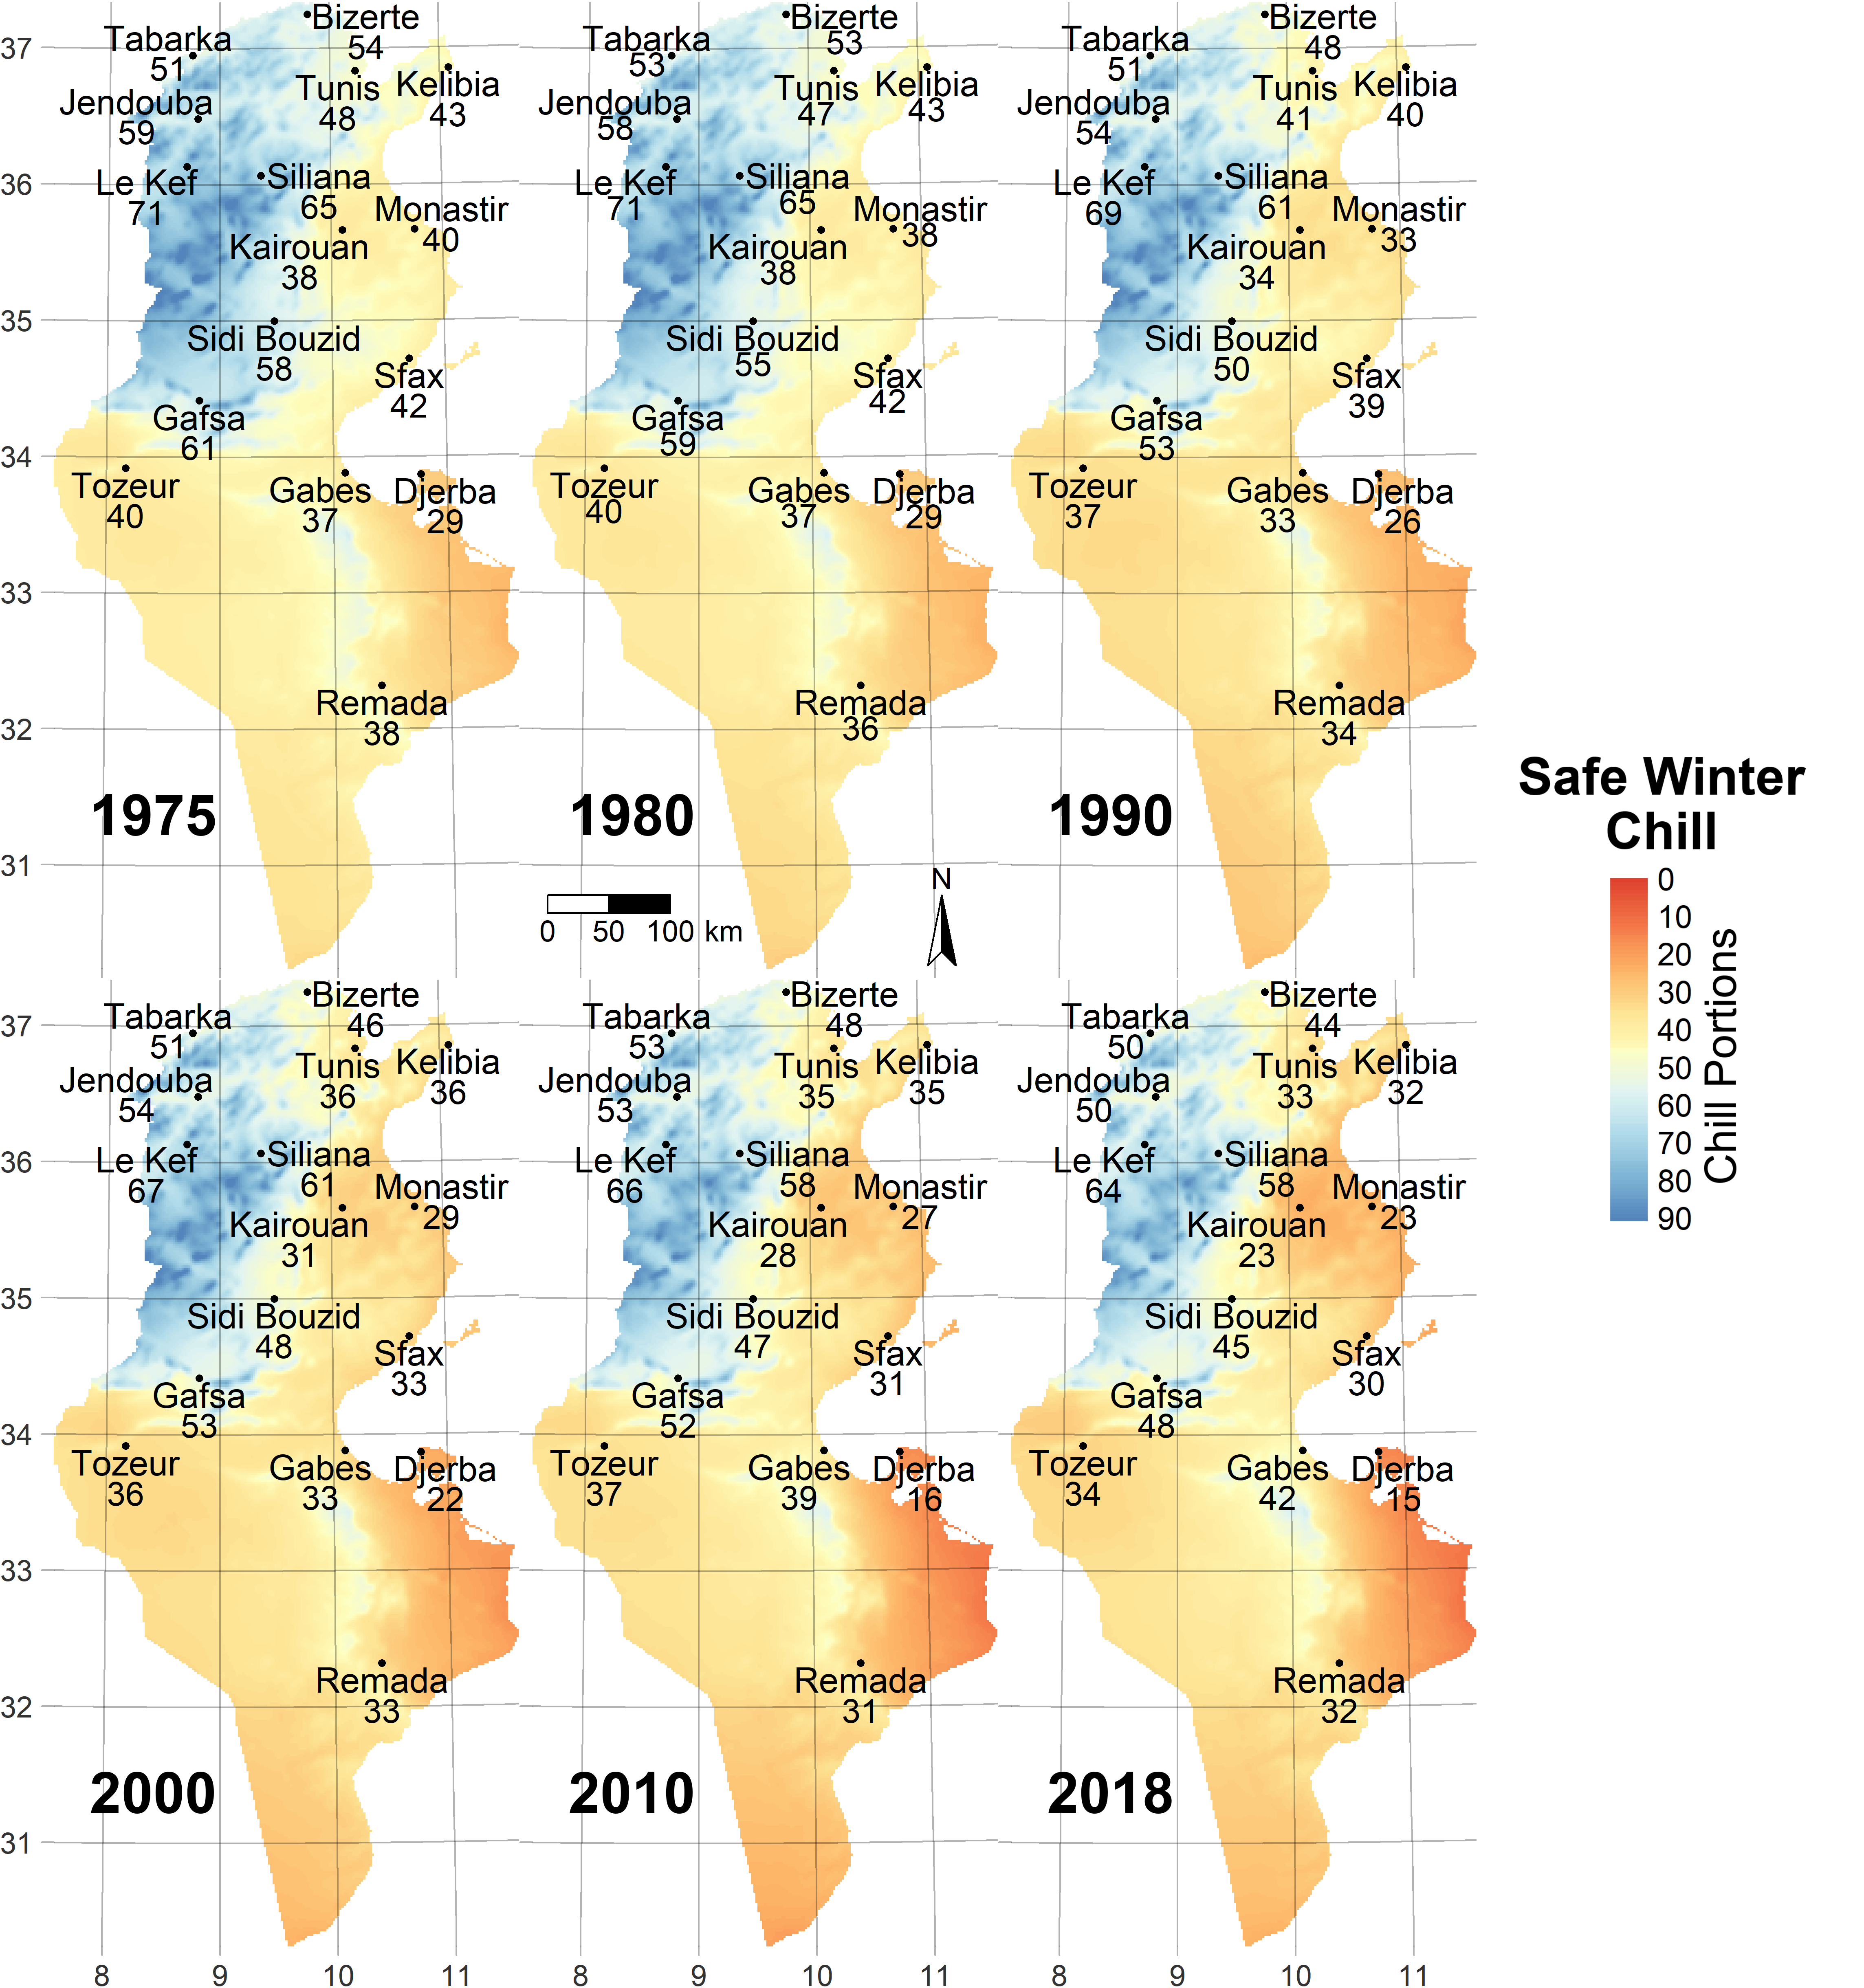 Chill availability maps for Tunisia for several past scenarios